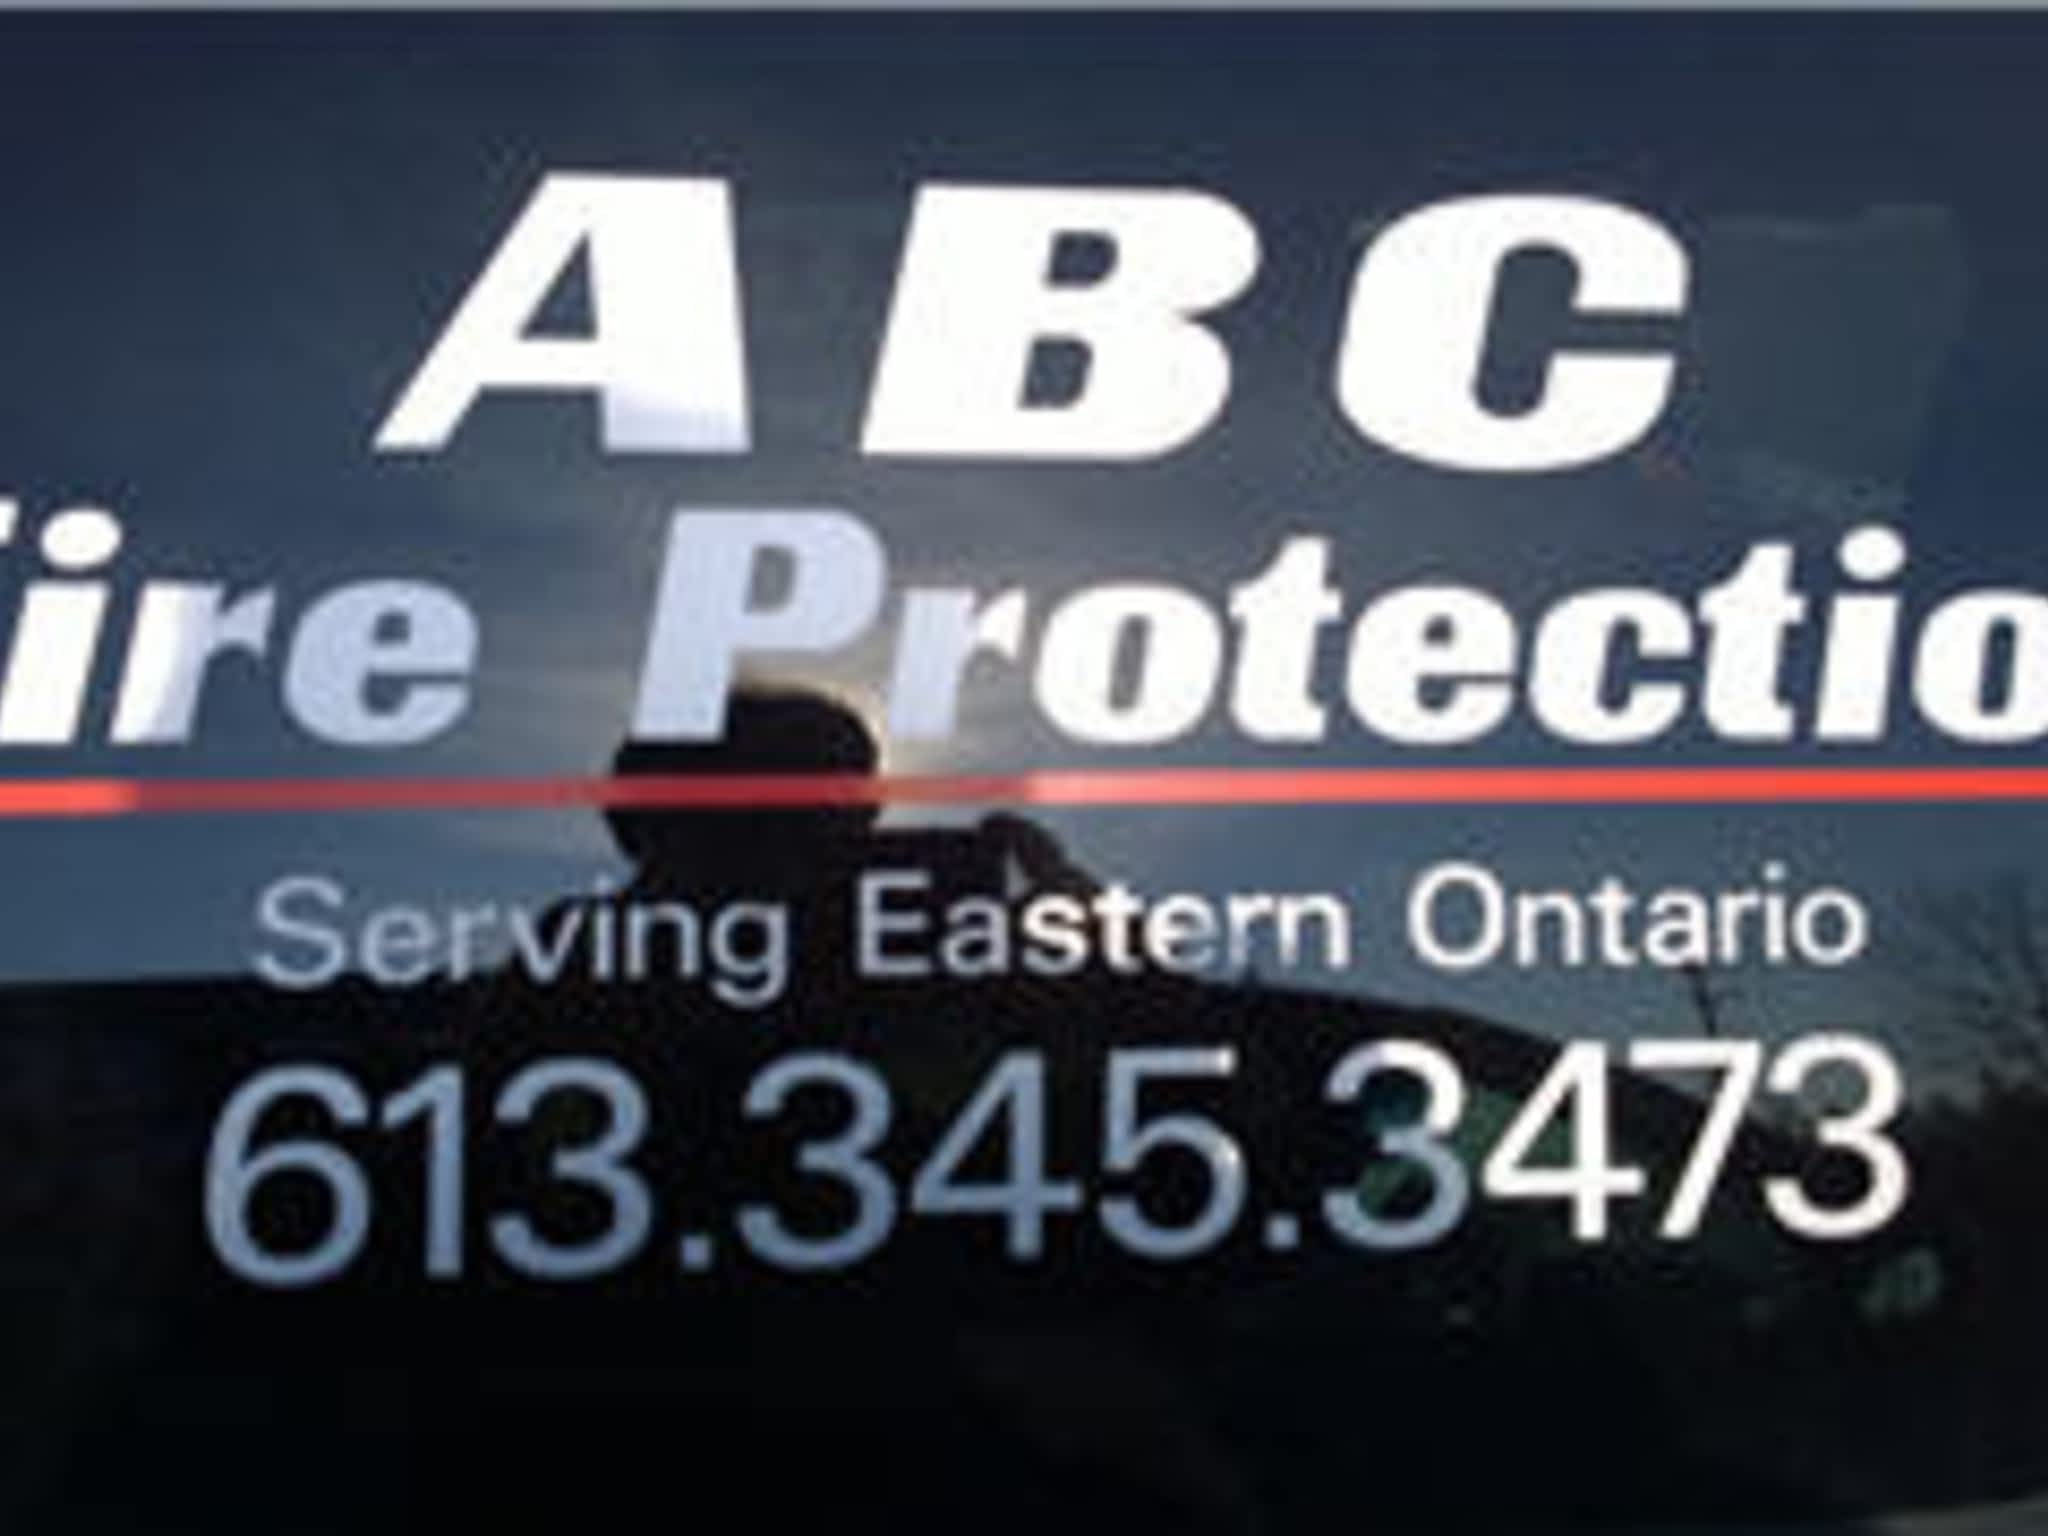 photo ABC Fire Protection Inc